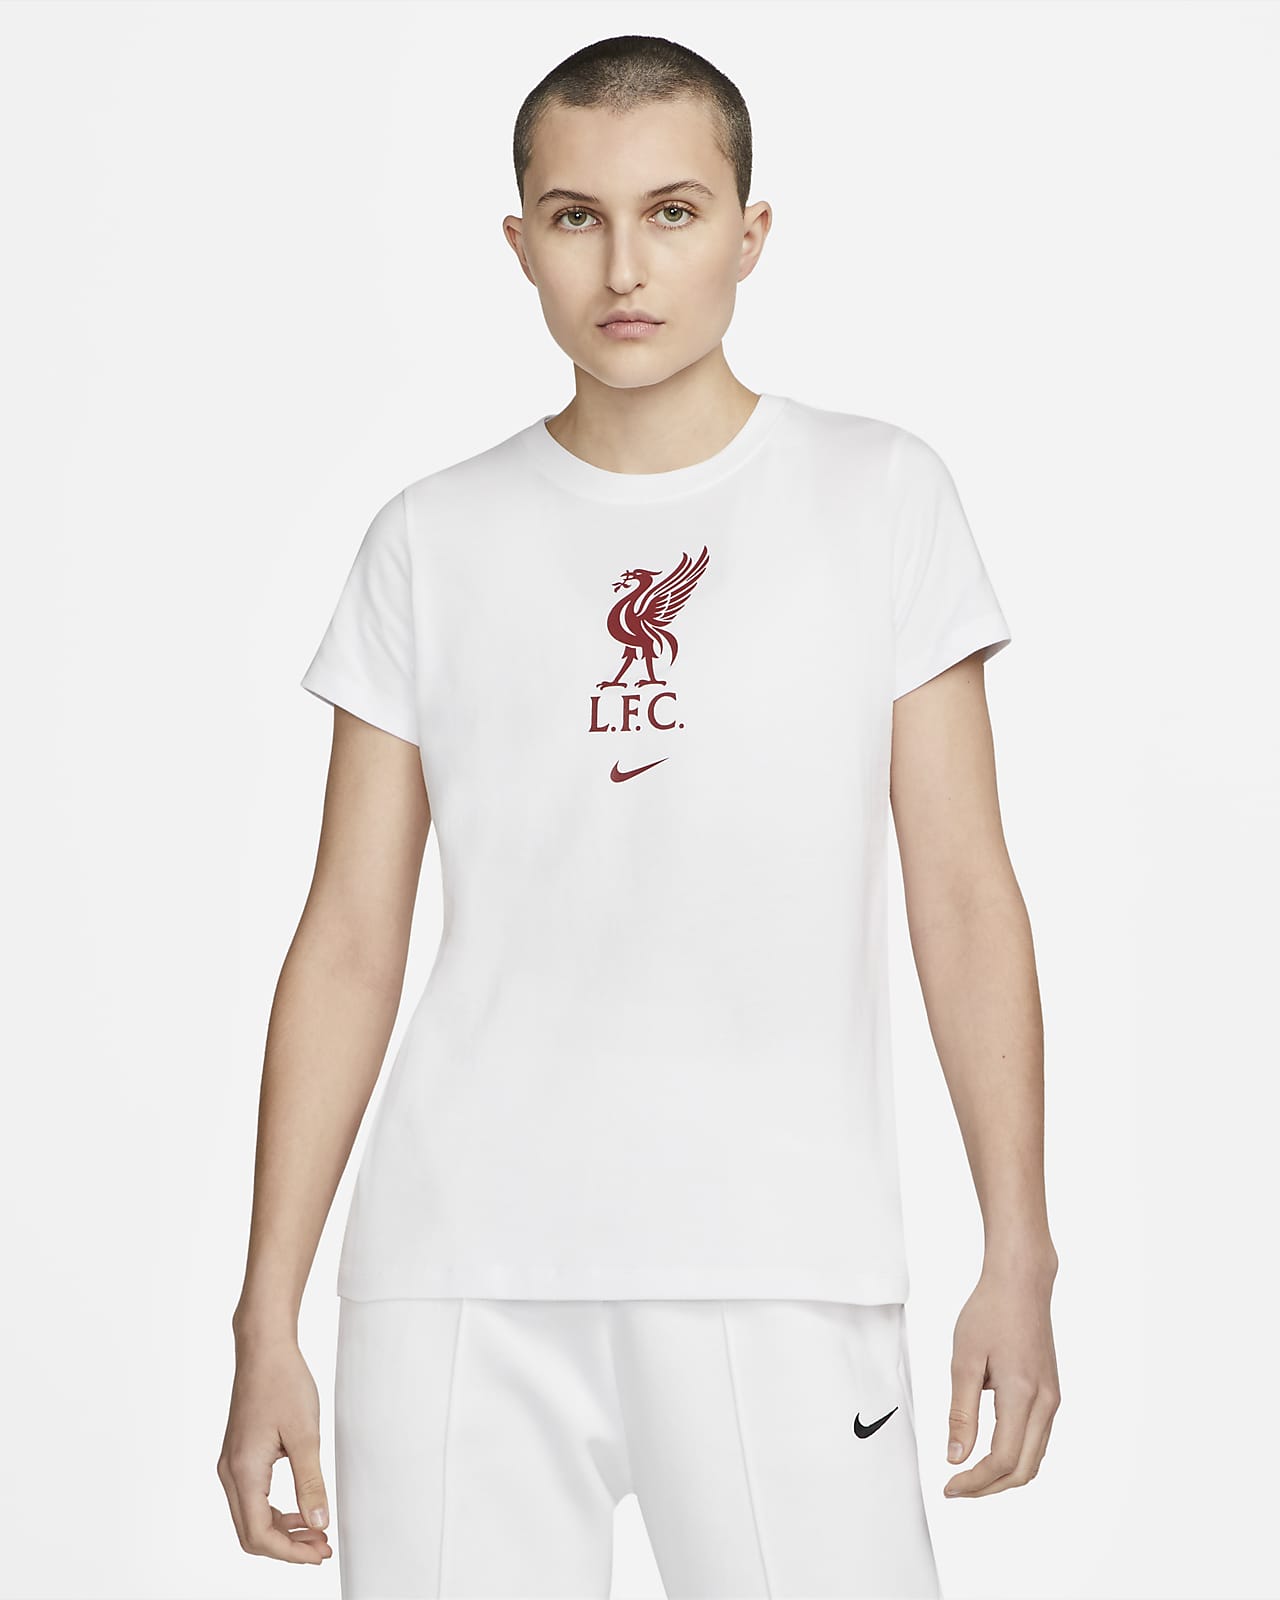 Liverpool F.C. Women's T-Shirt